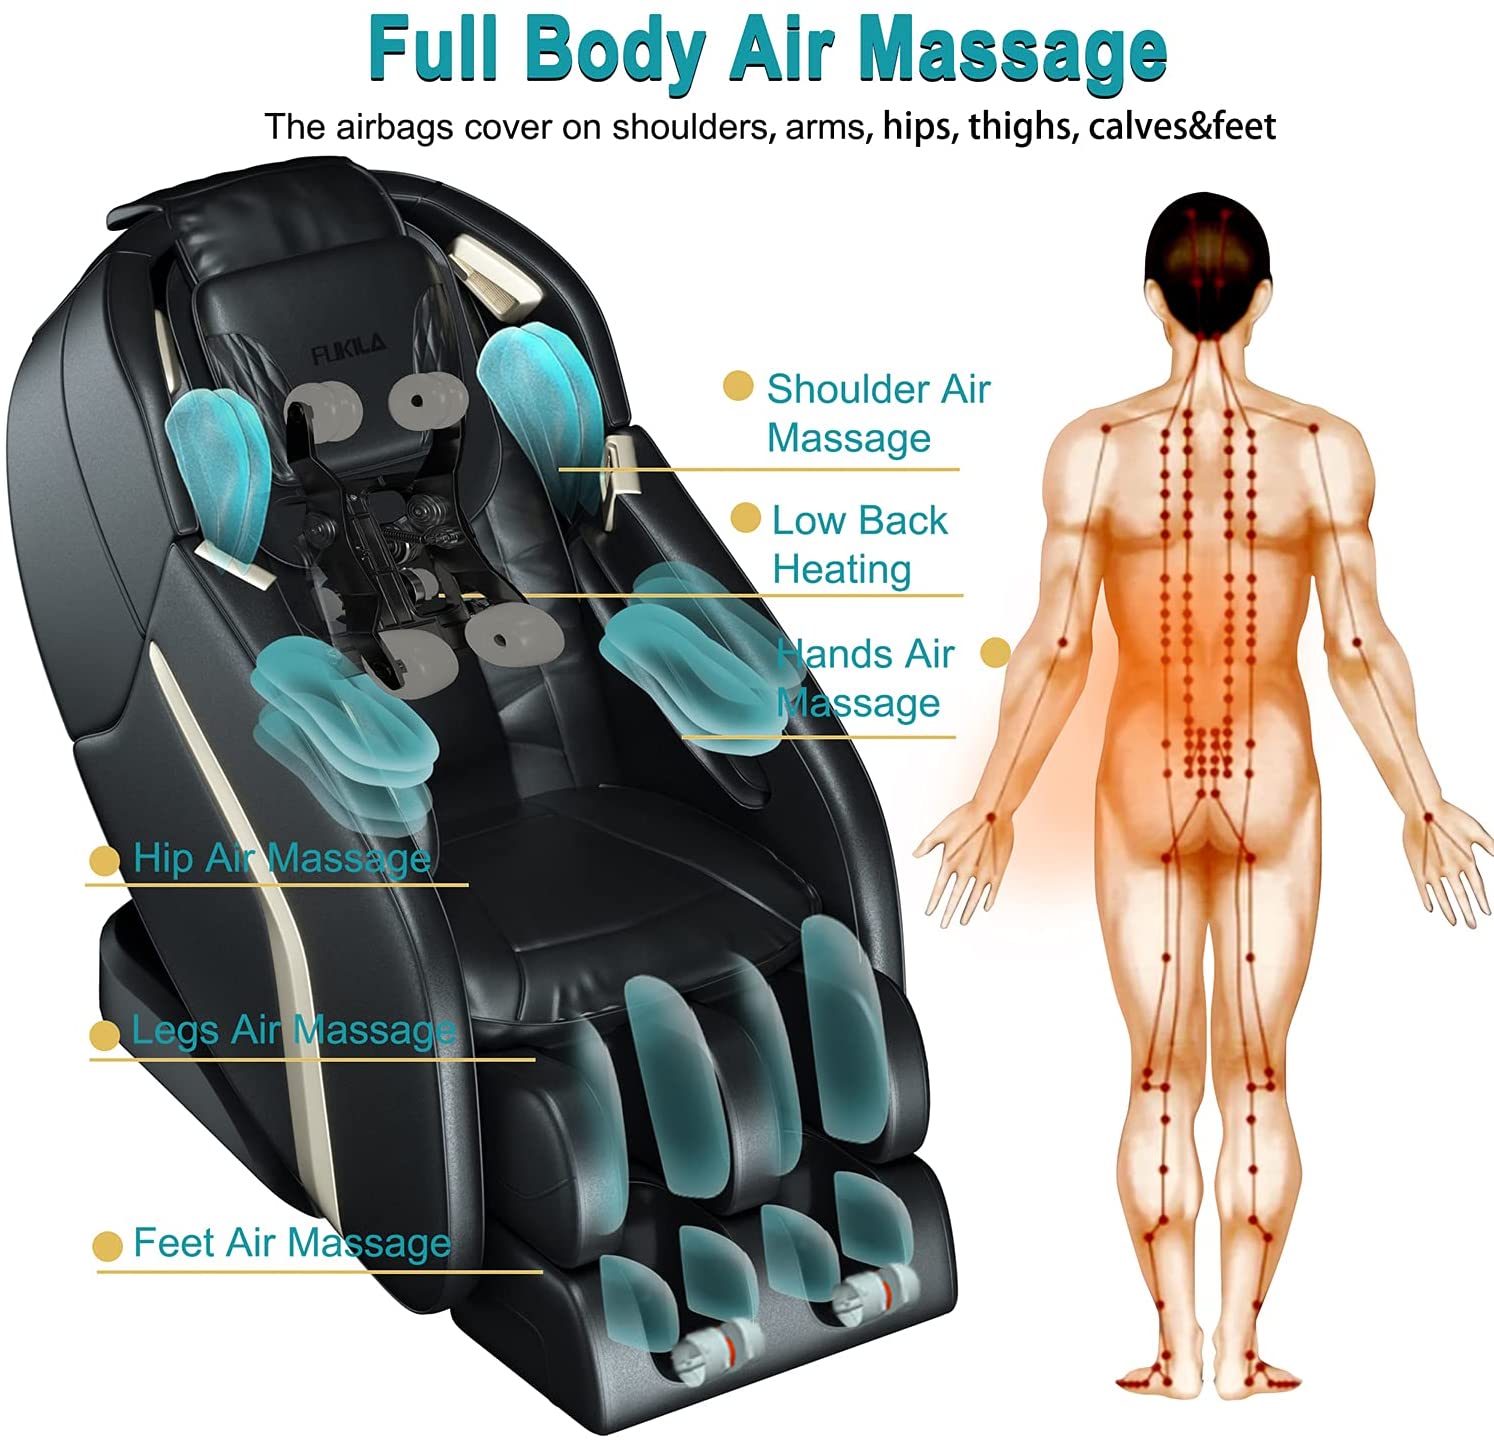 Back & Full Body Massage Chairs